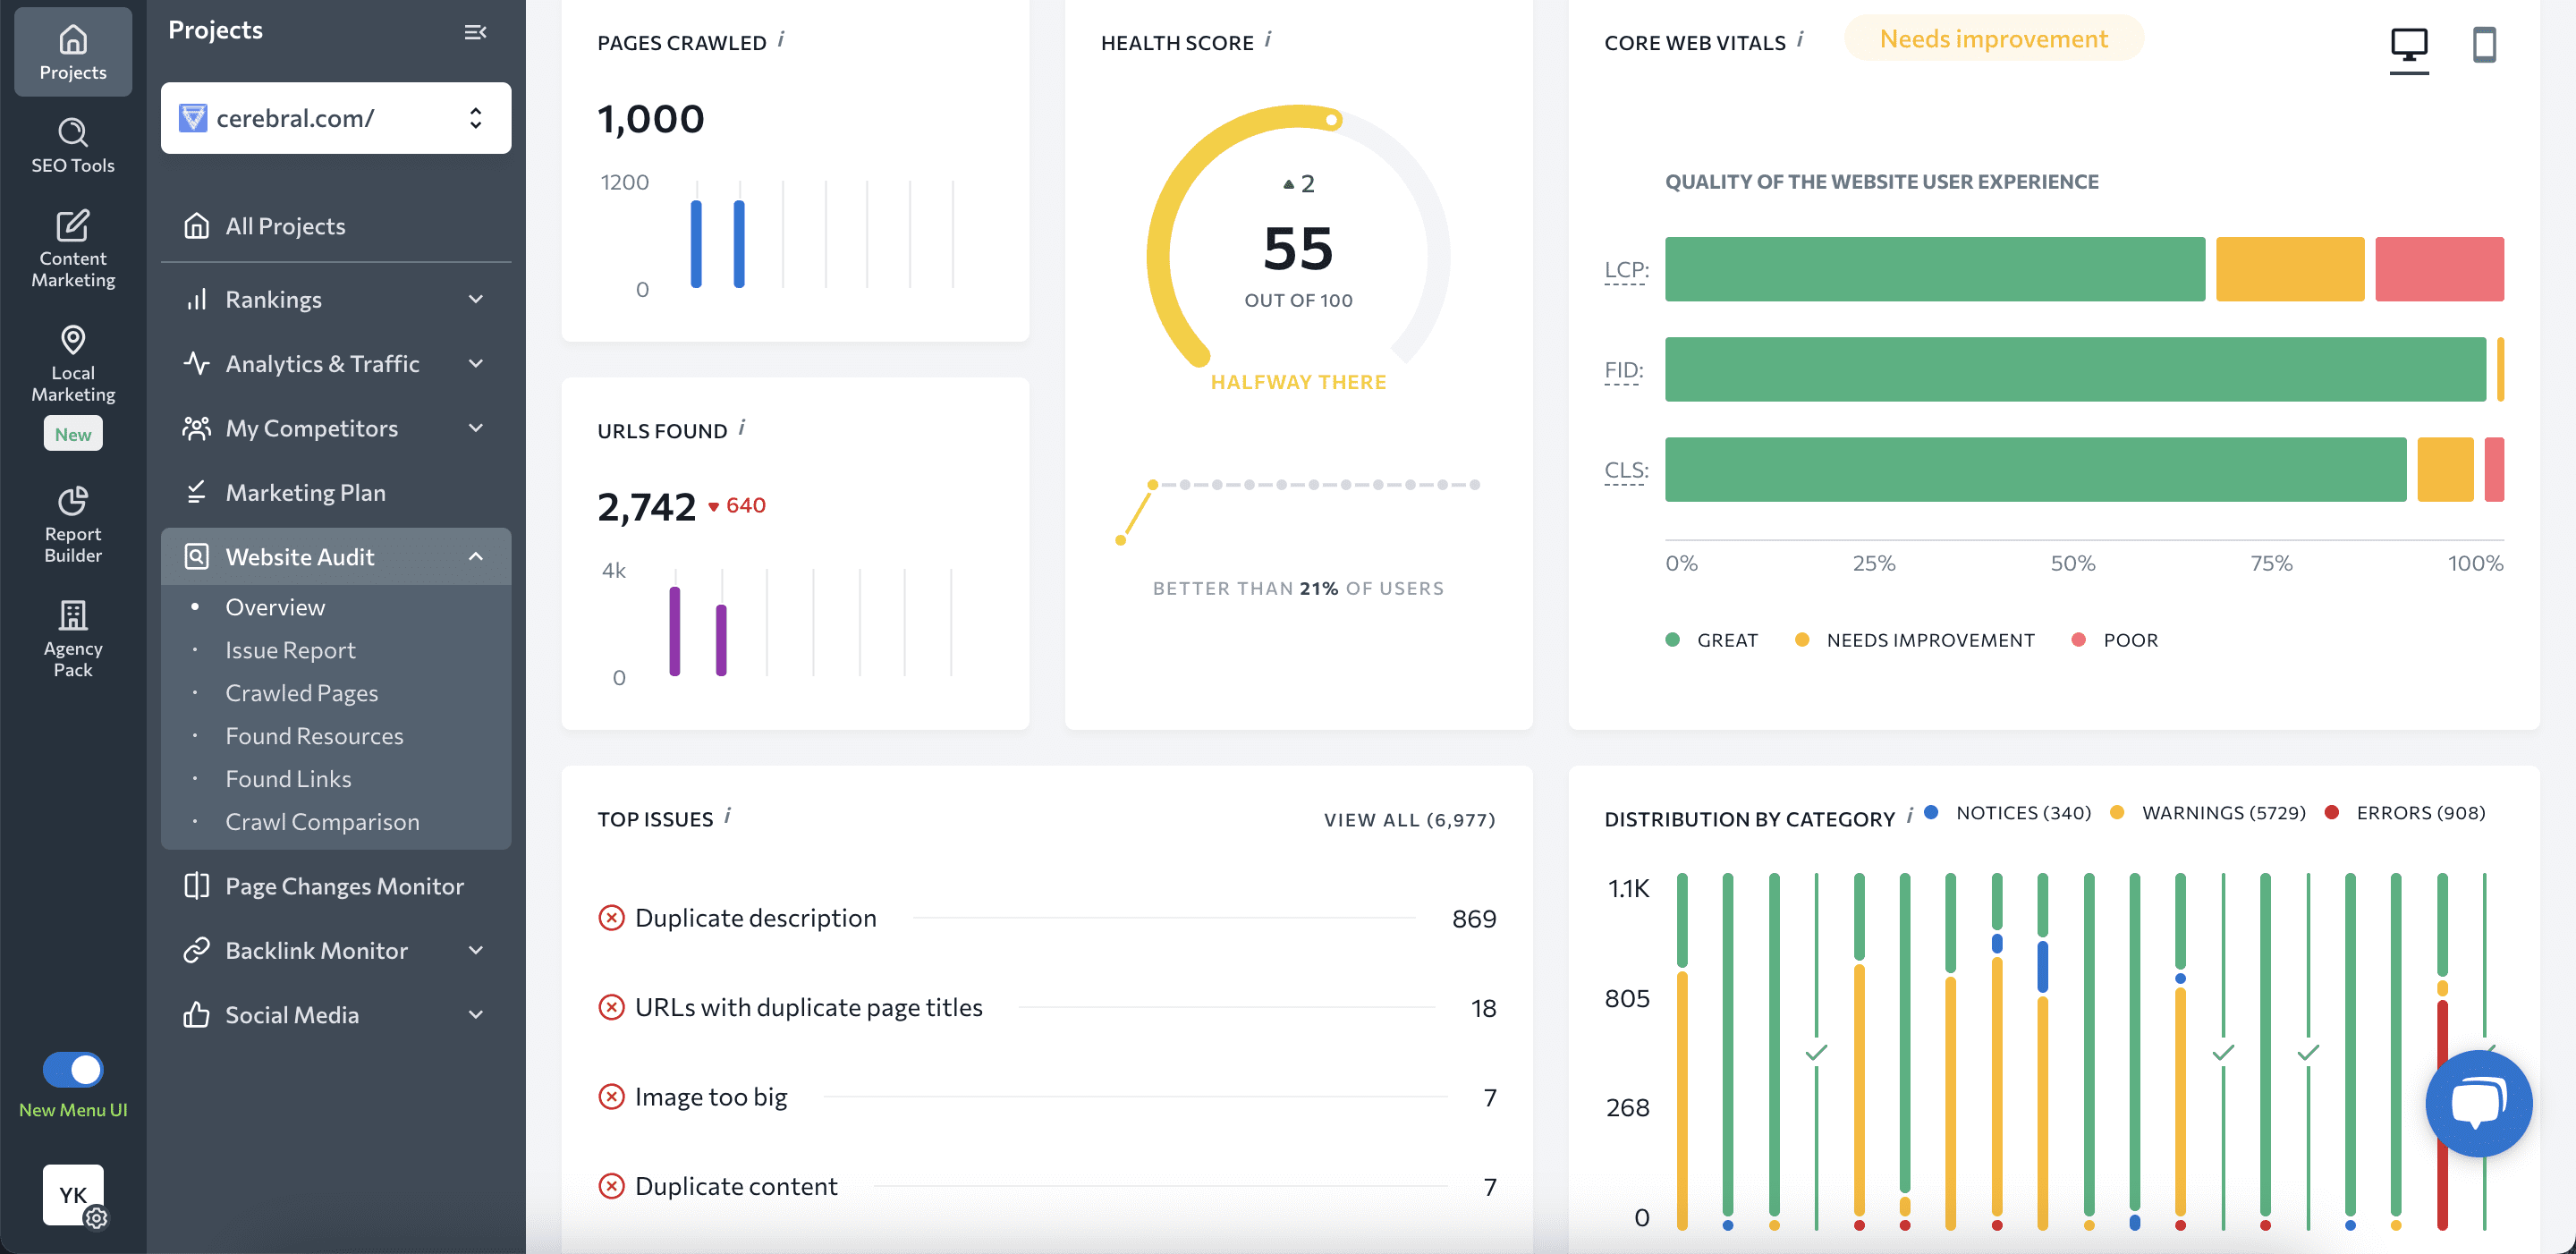 SE Ranking's interface